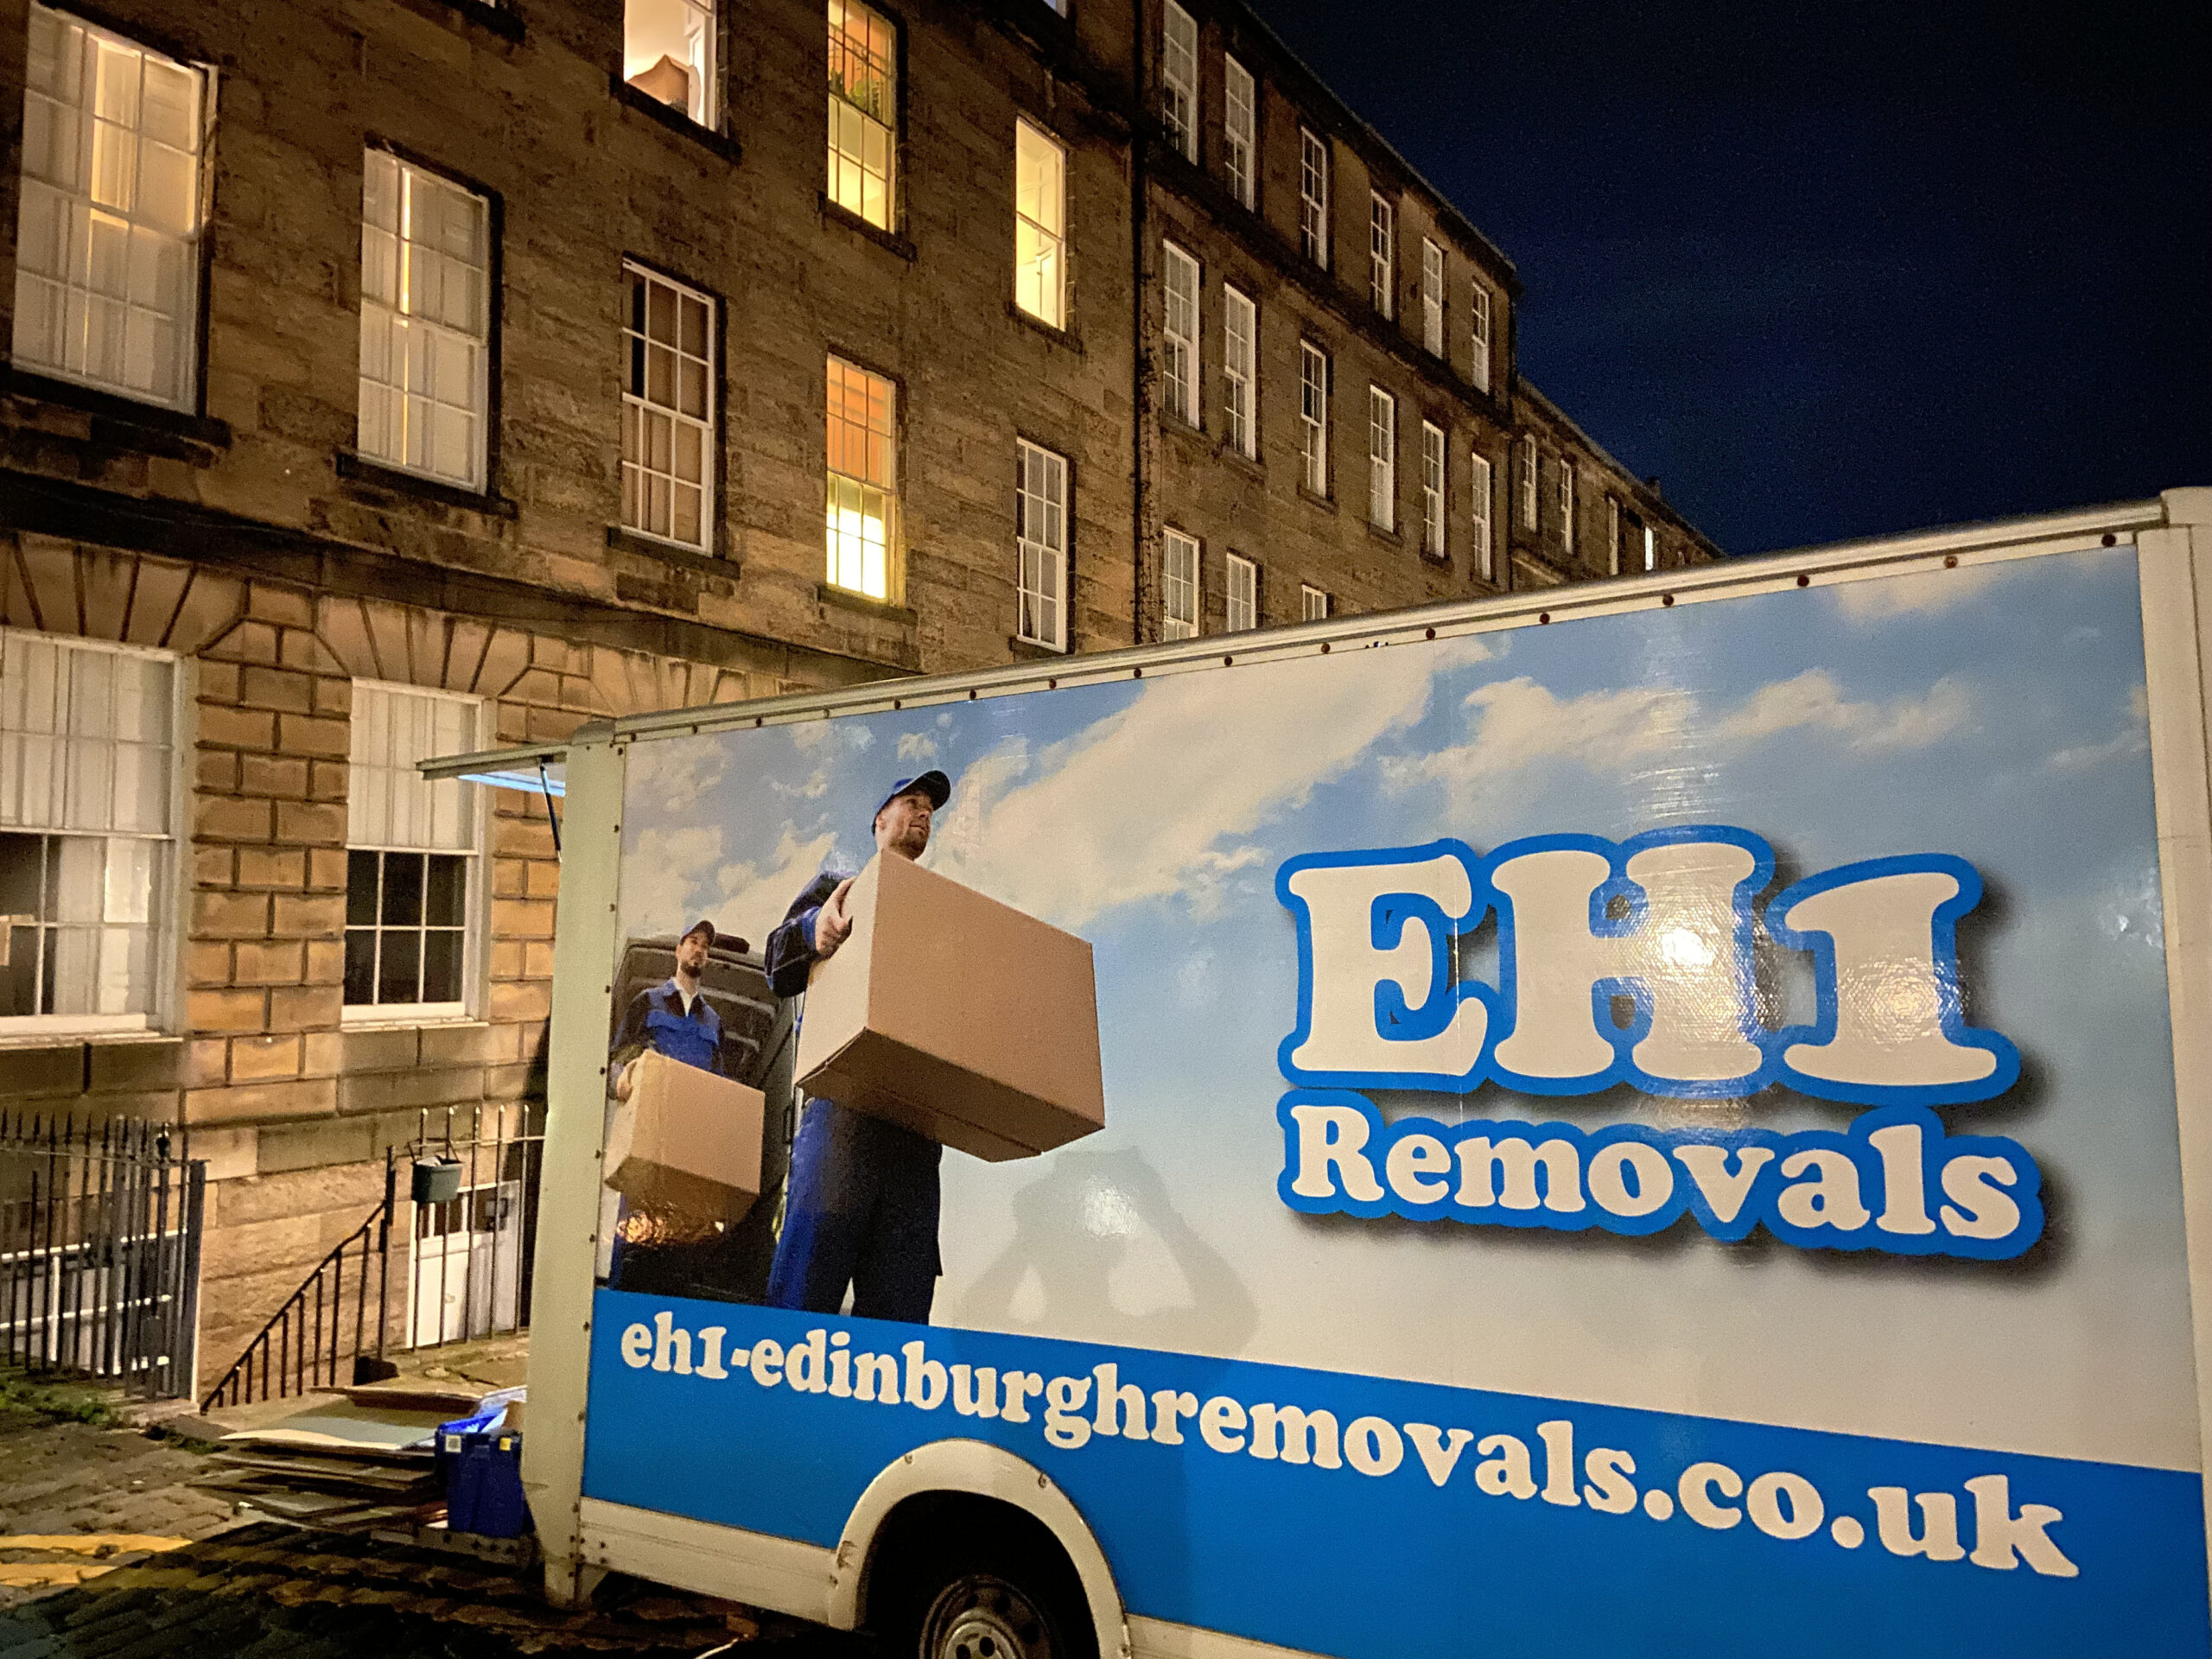 Eh1 edinburgh removals